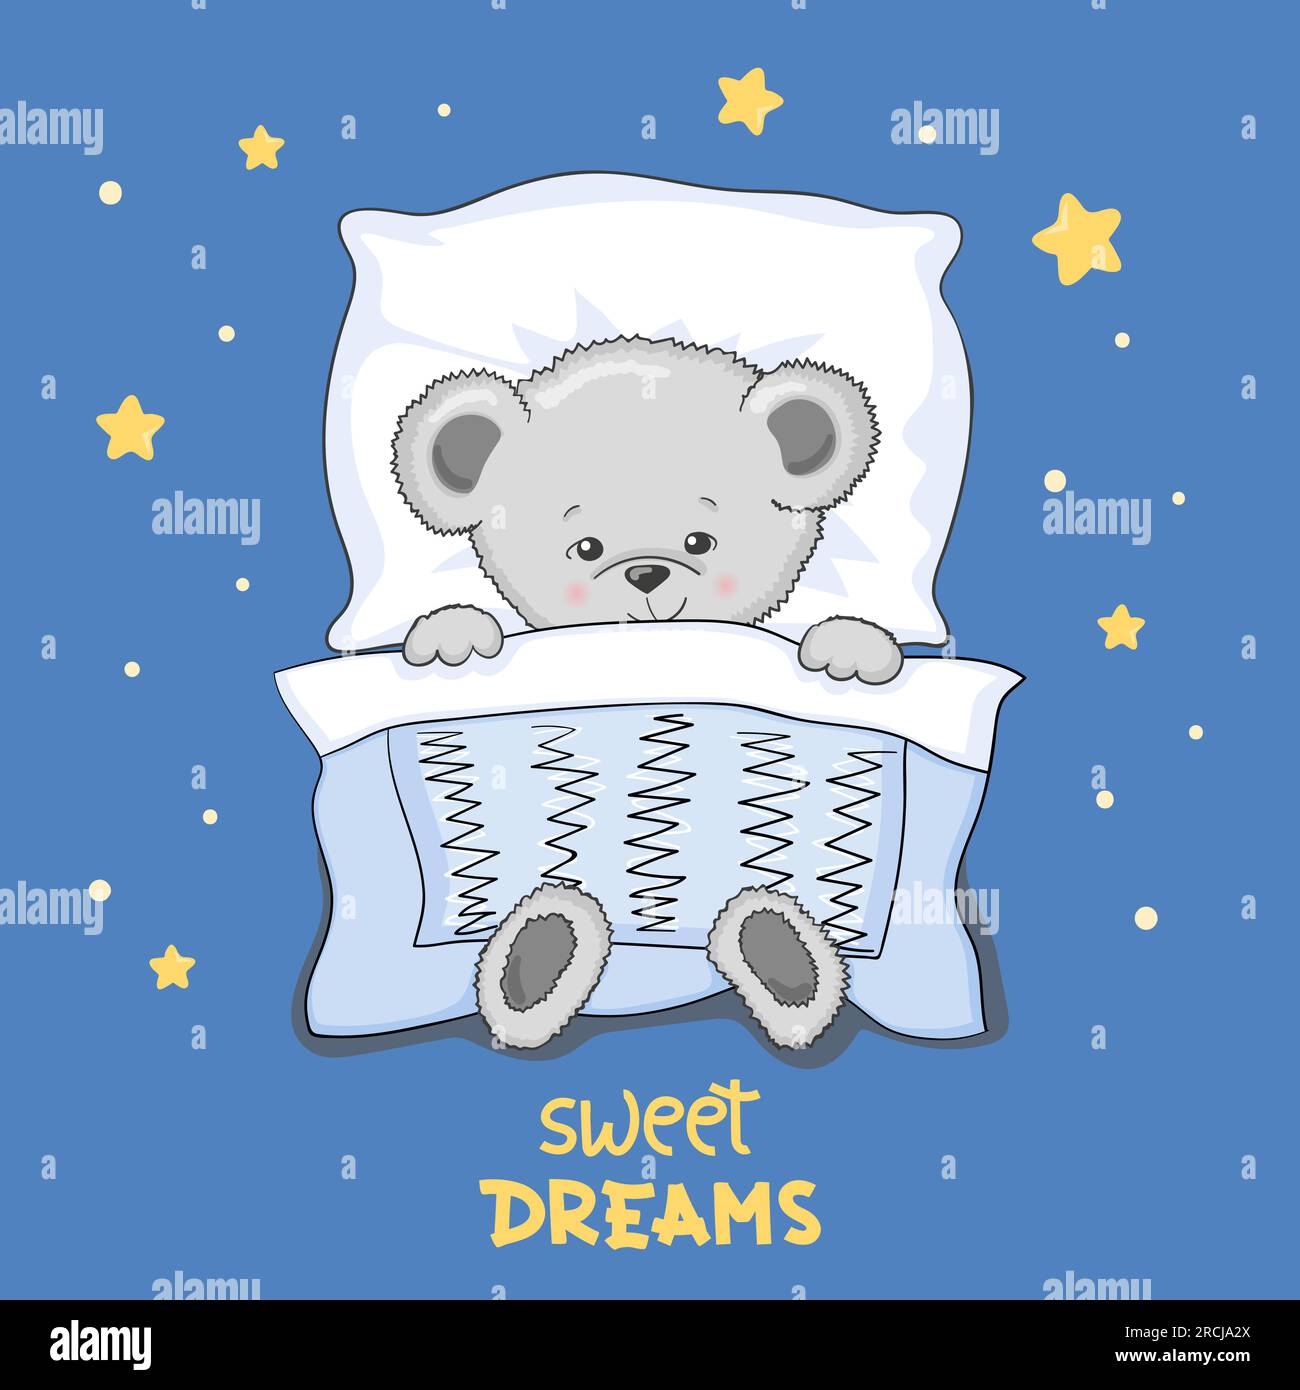 Cute Cartoon Sleeping Teddy Bear Vector Illustration Stock Vector Image